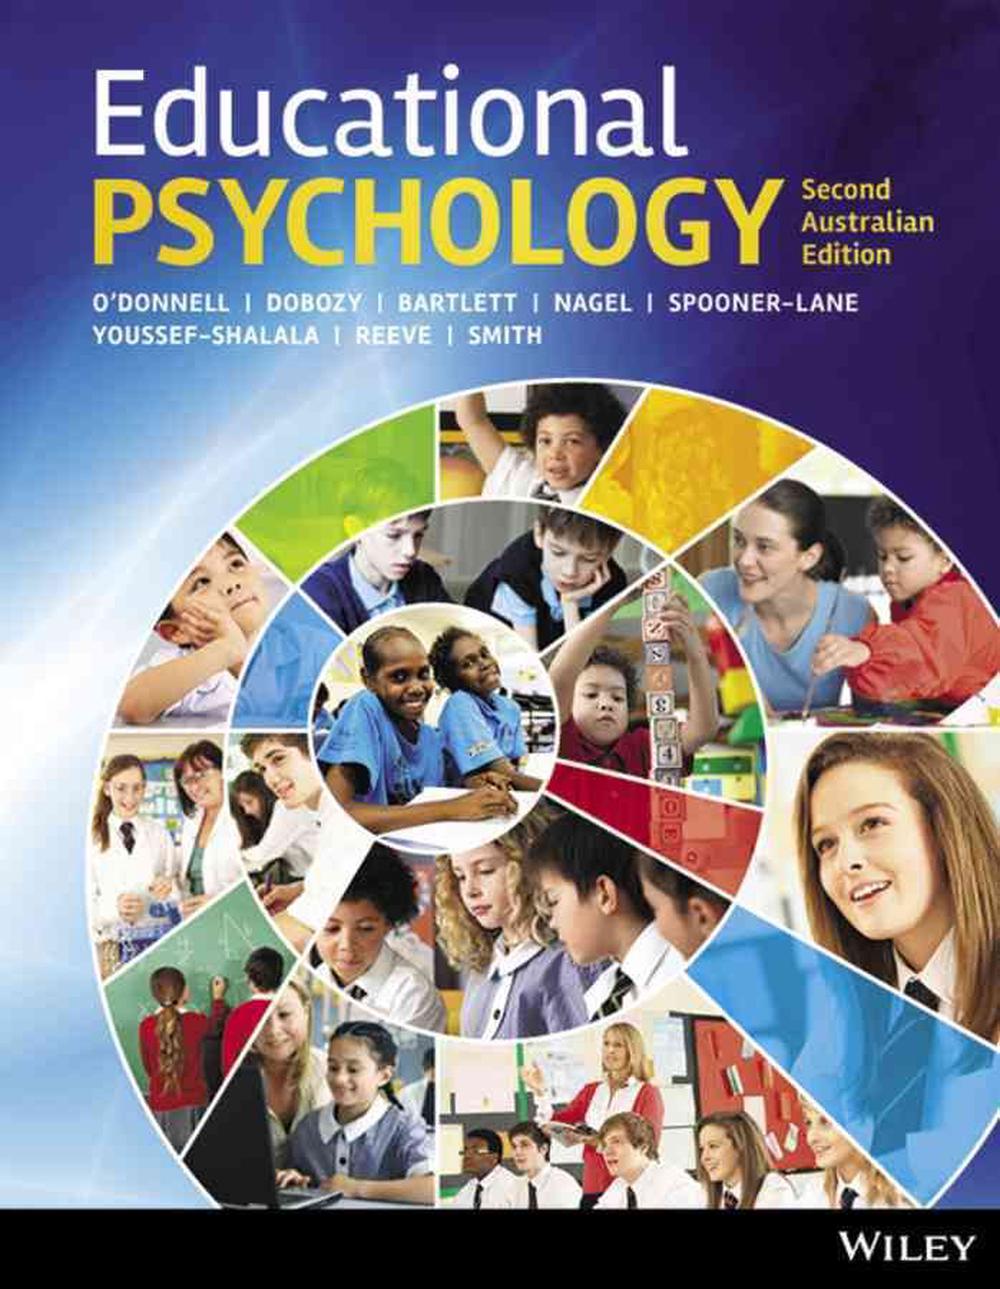 phd in educational psychology australia